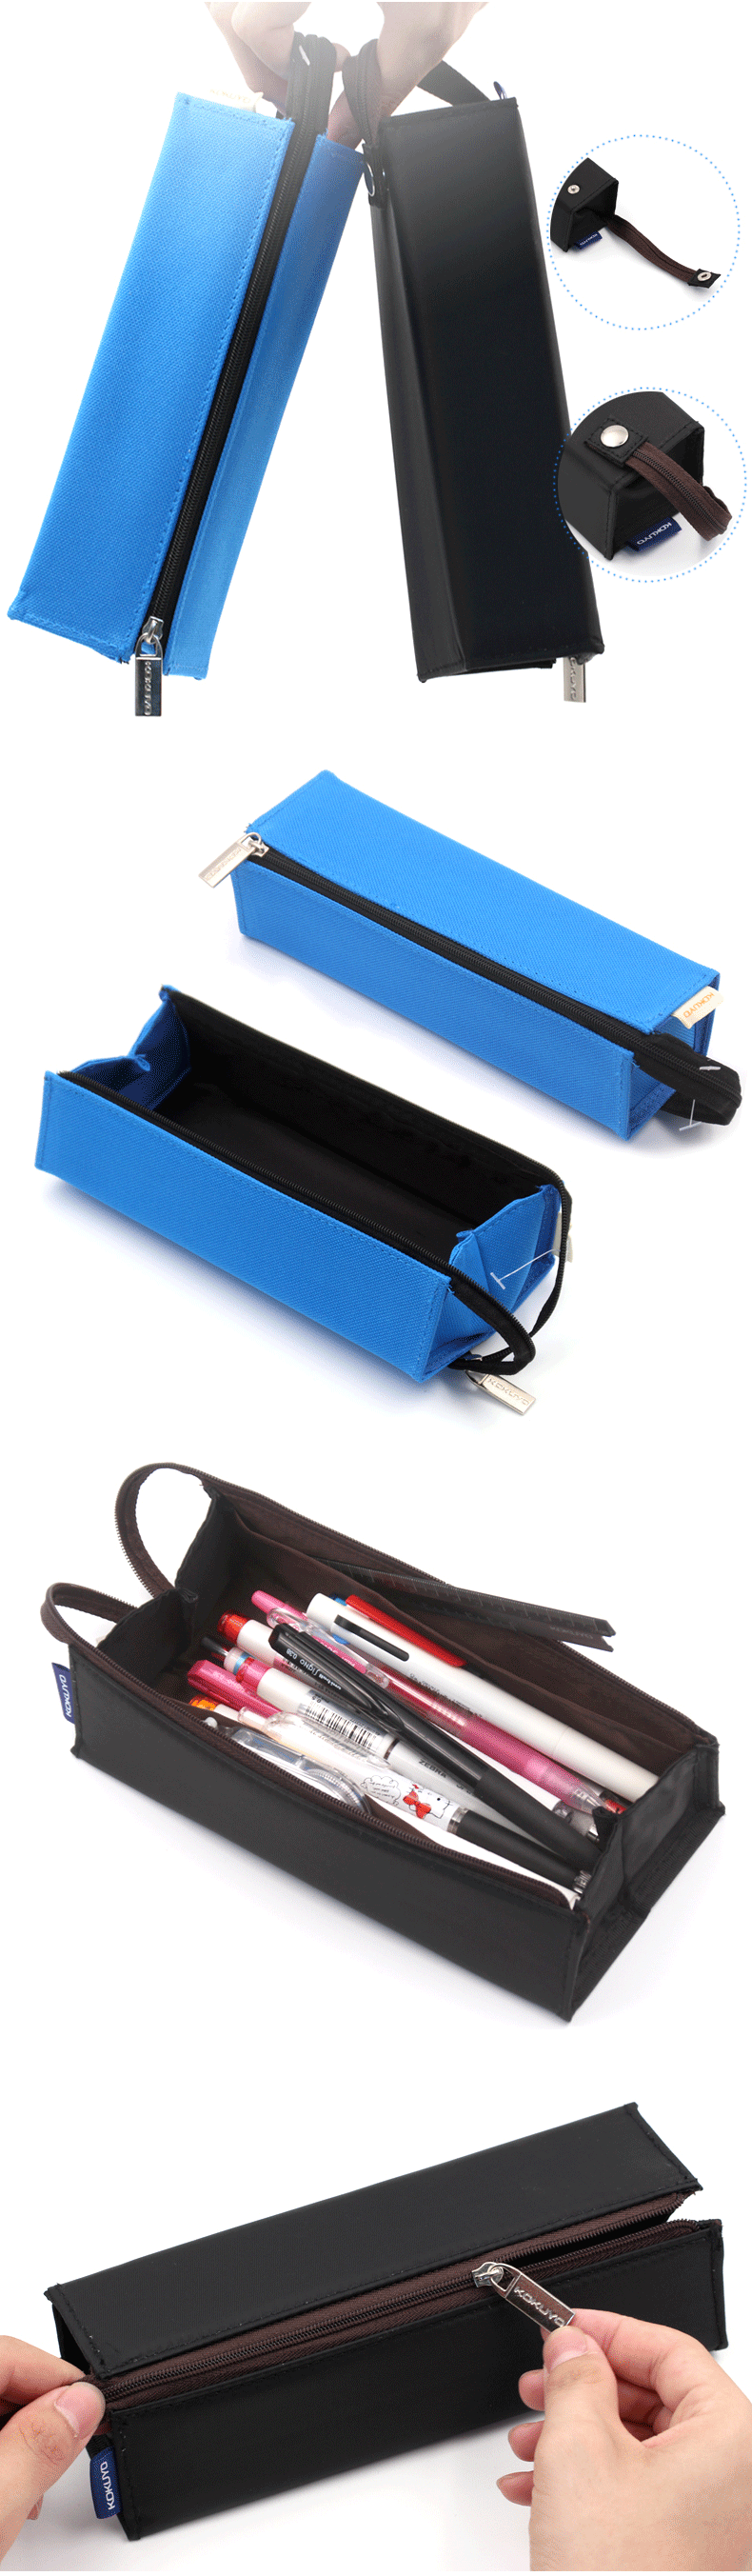 WAM-PC-01-Pencil-Case-Gift-Children-Pencil-Box-Pen-Bag-Students-School-Stationery-Supplies-1214447